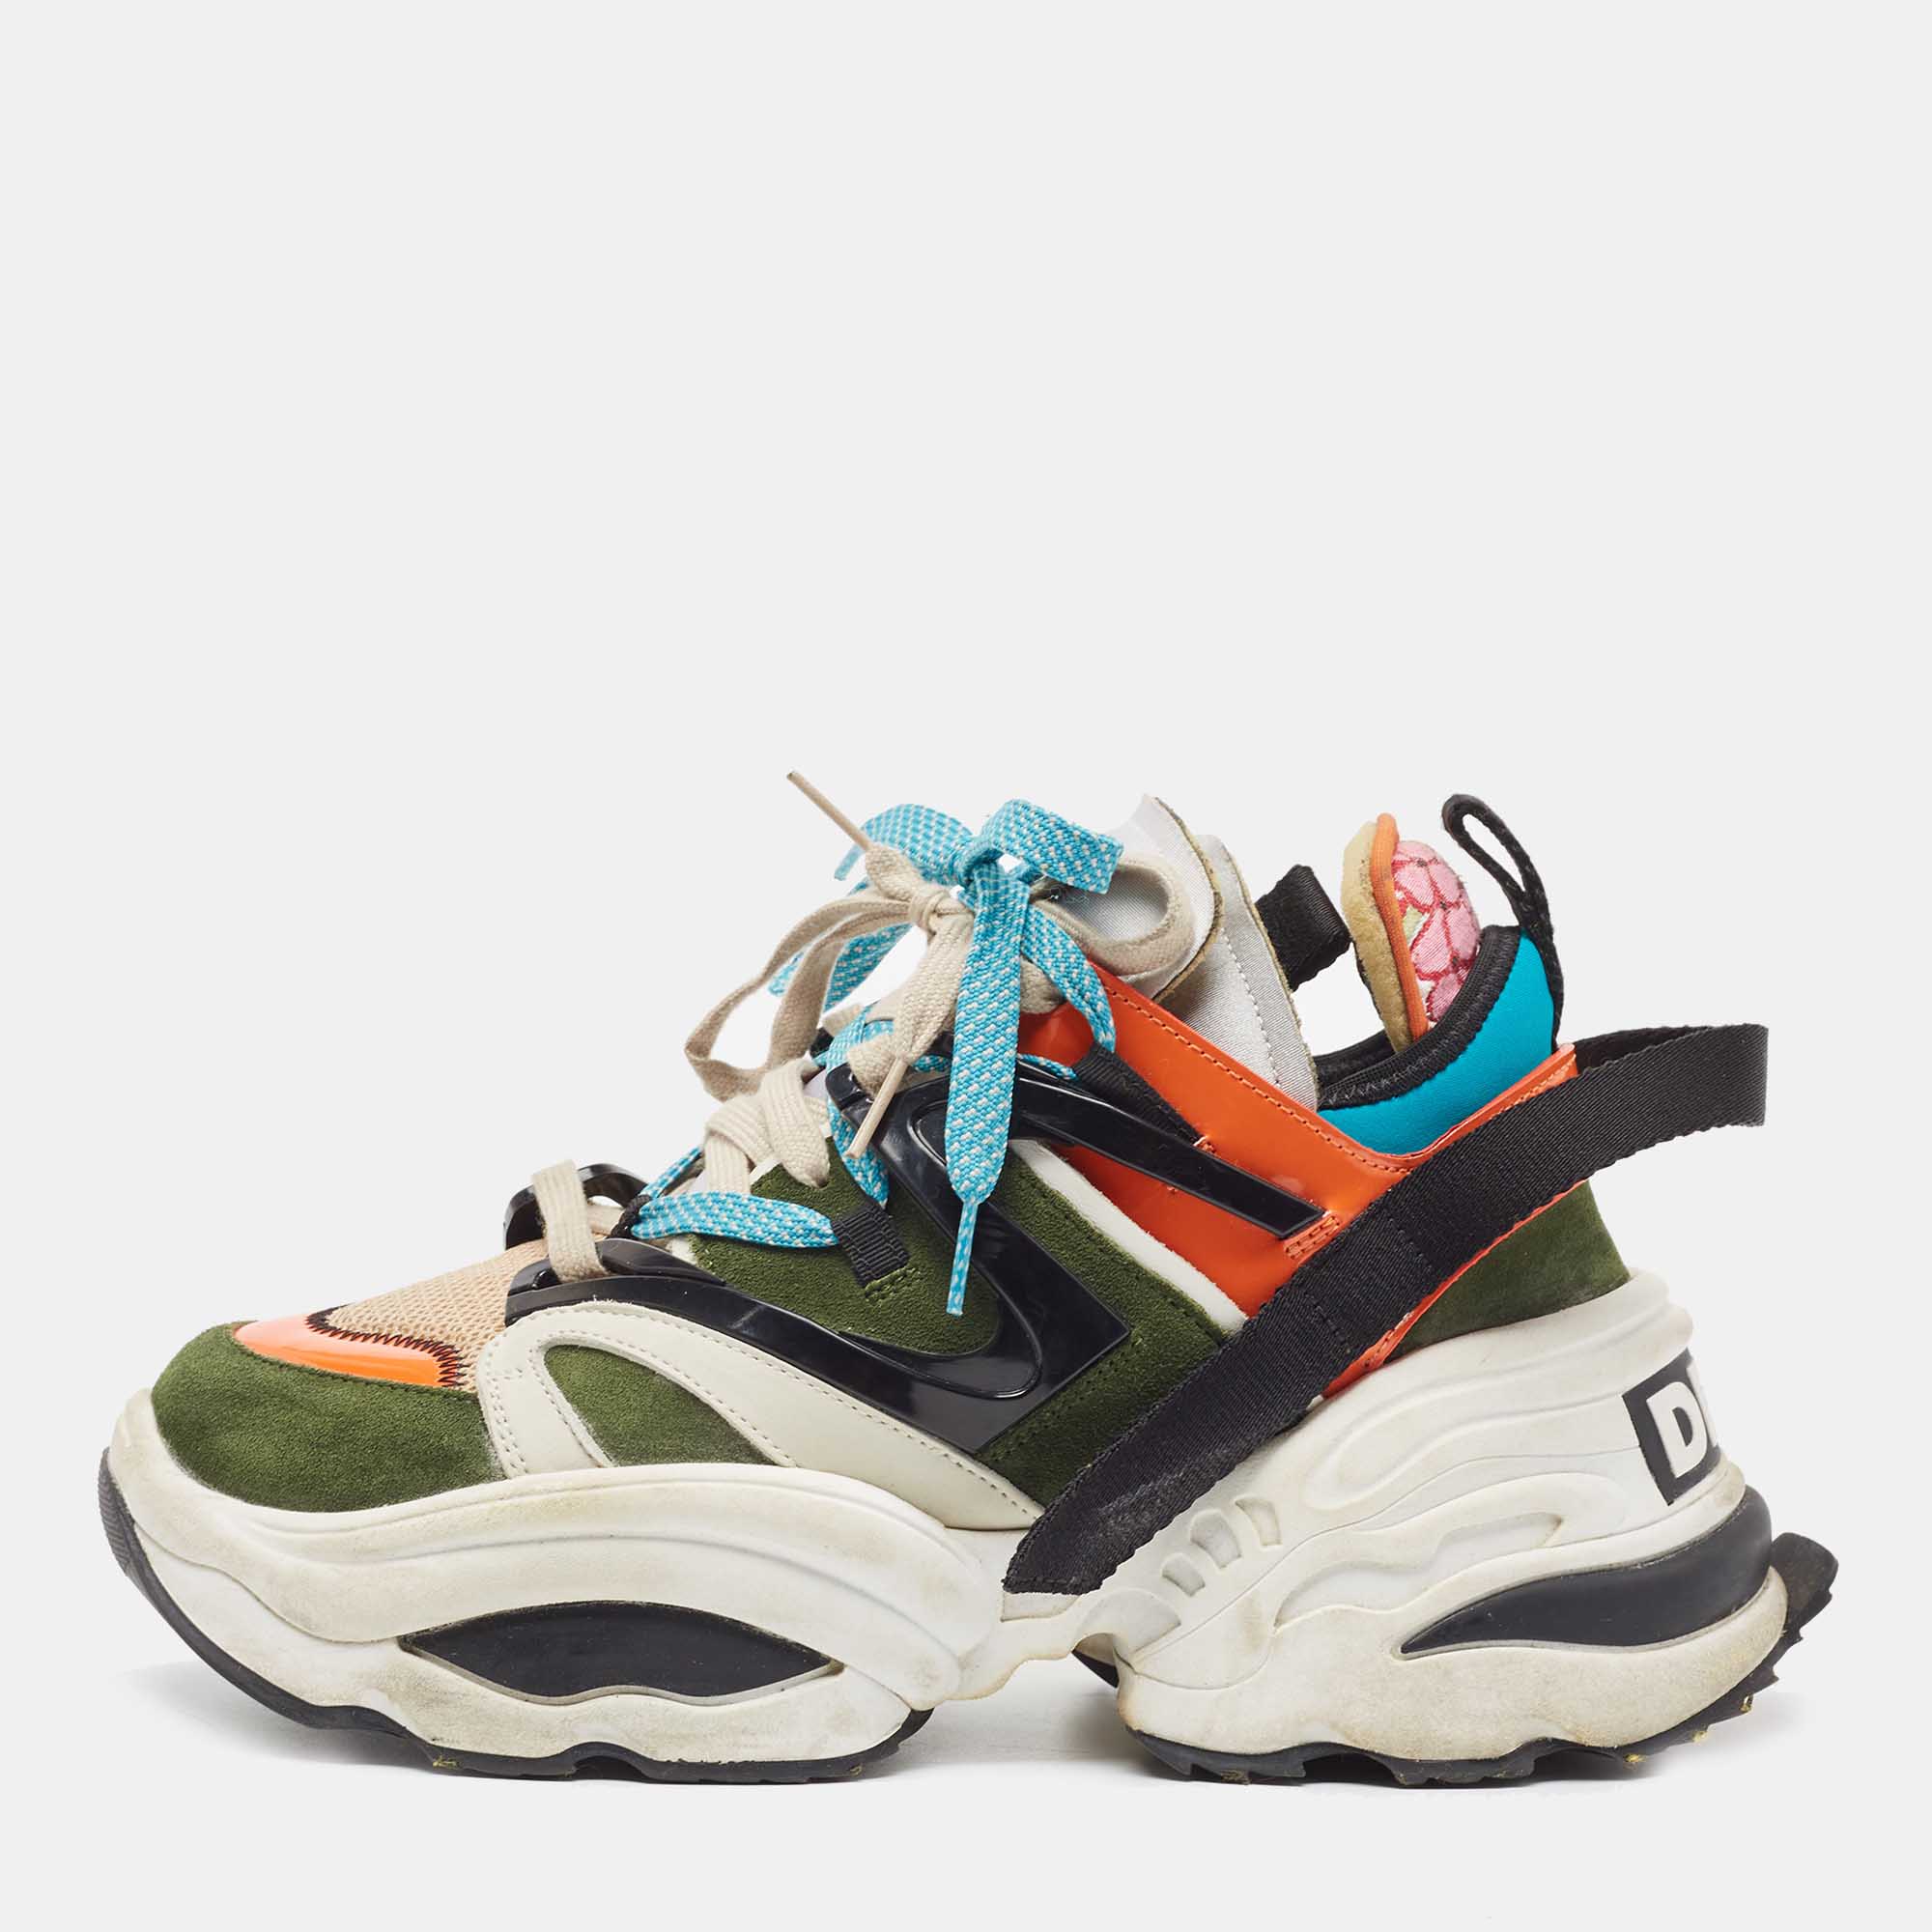 Dsquared² Multicolor Suede Platform Sneakers Size 43